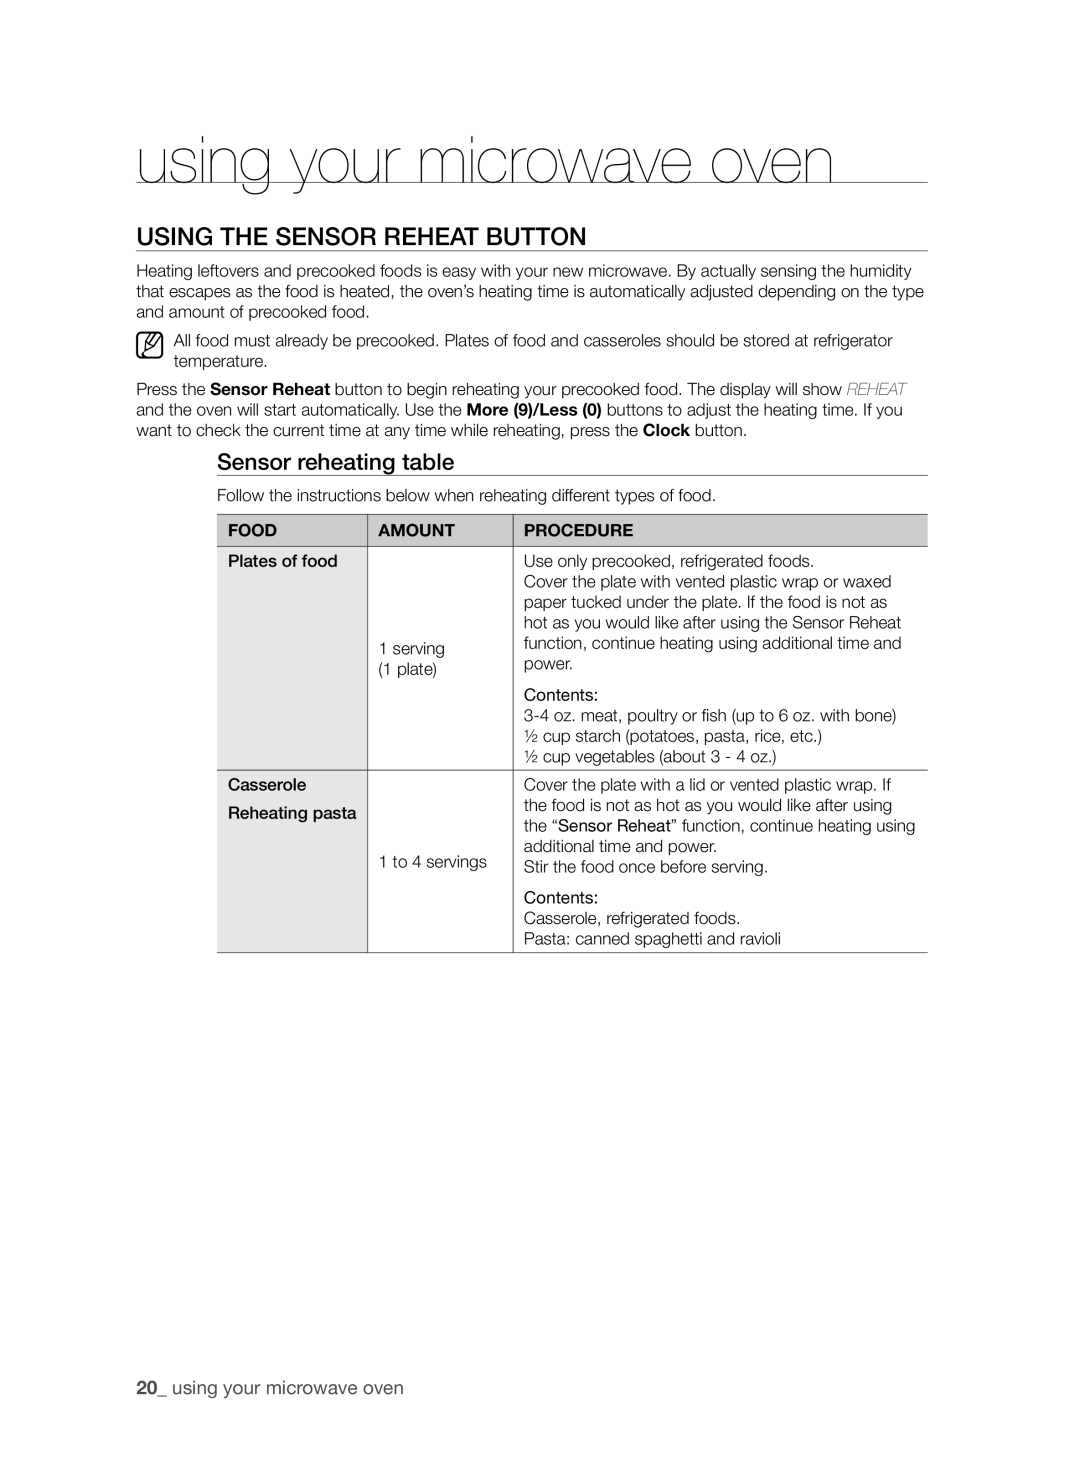 Samsung SMH7185 user manual Using the Sensor Reheat button, using your microwave oven, Sensor reheating table 